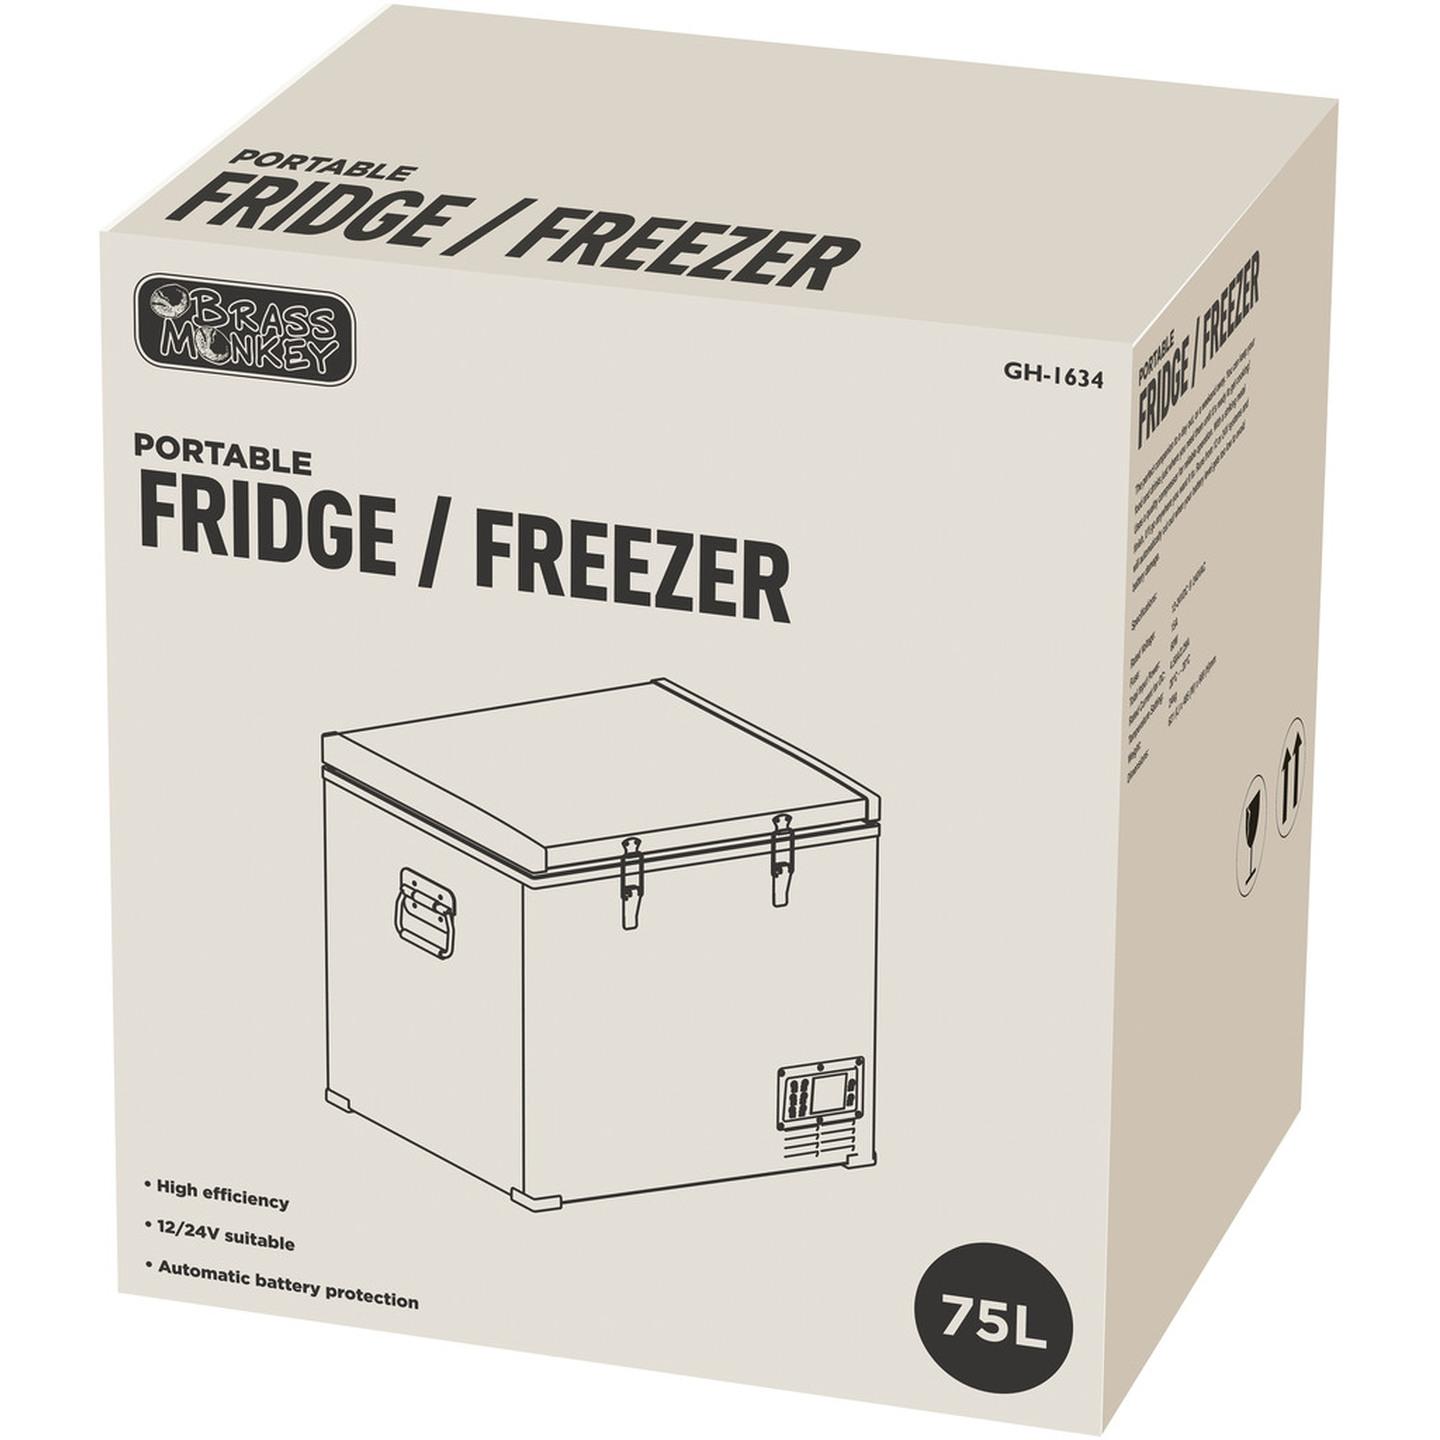 75L Brass Monkey Portable Fridge or Freezer